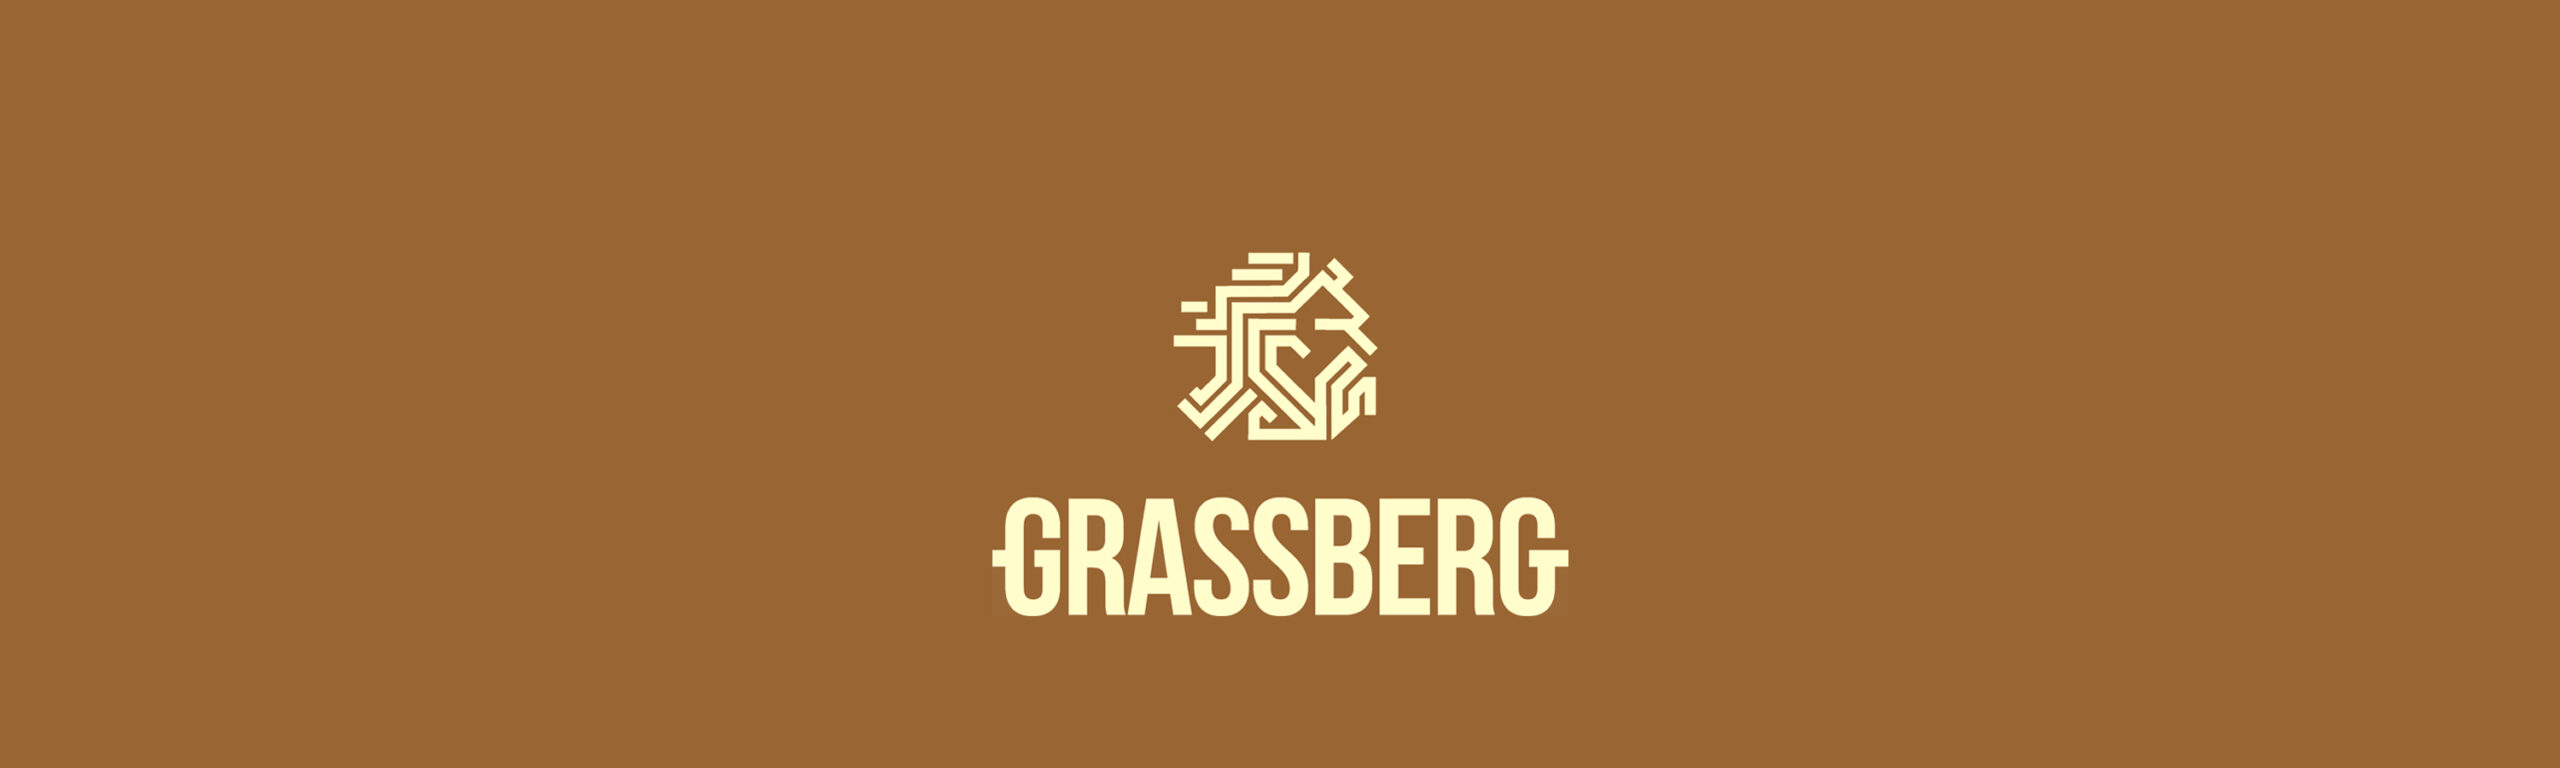 GRASSBERG